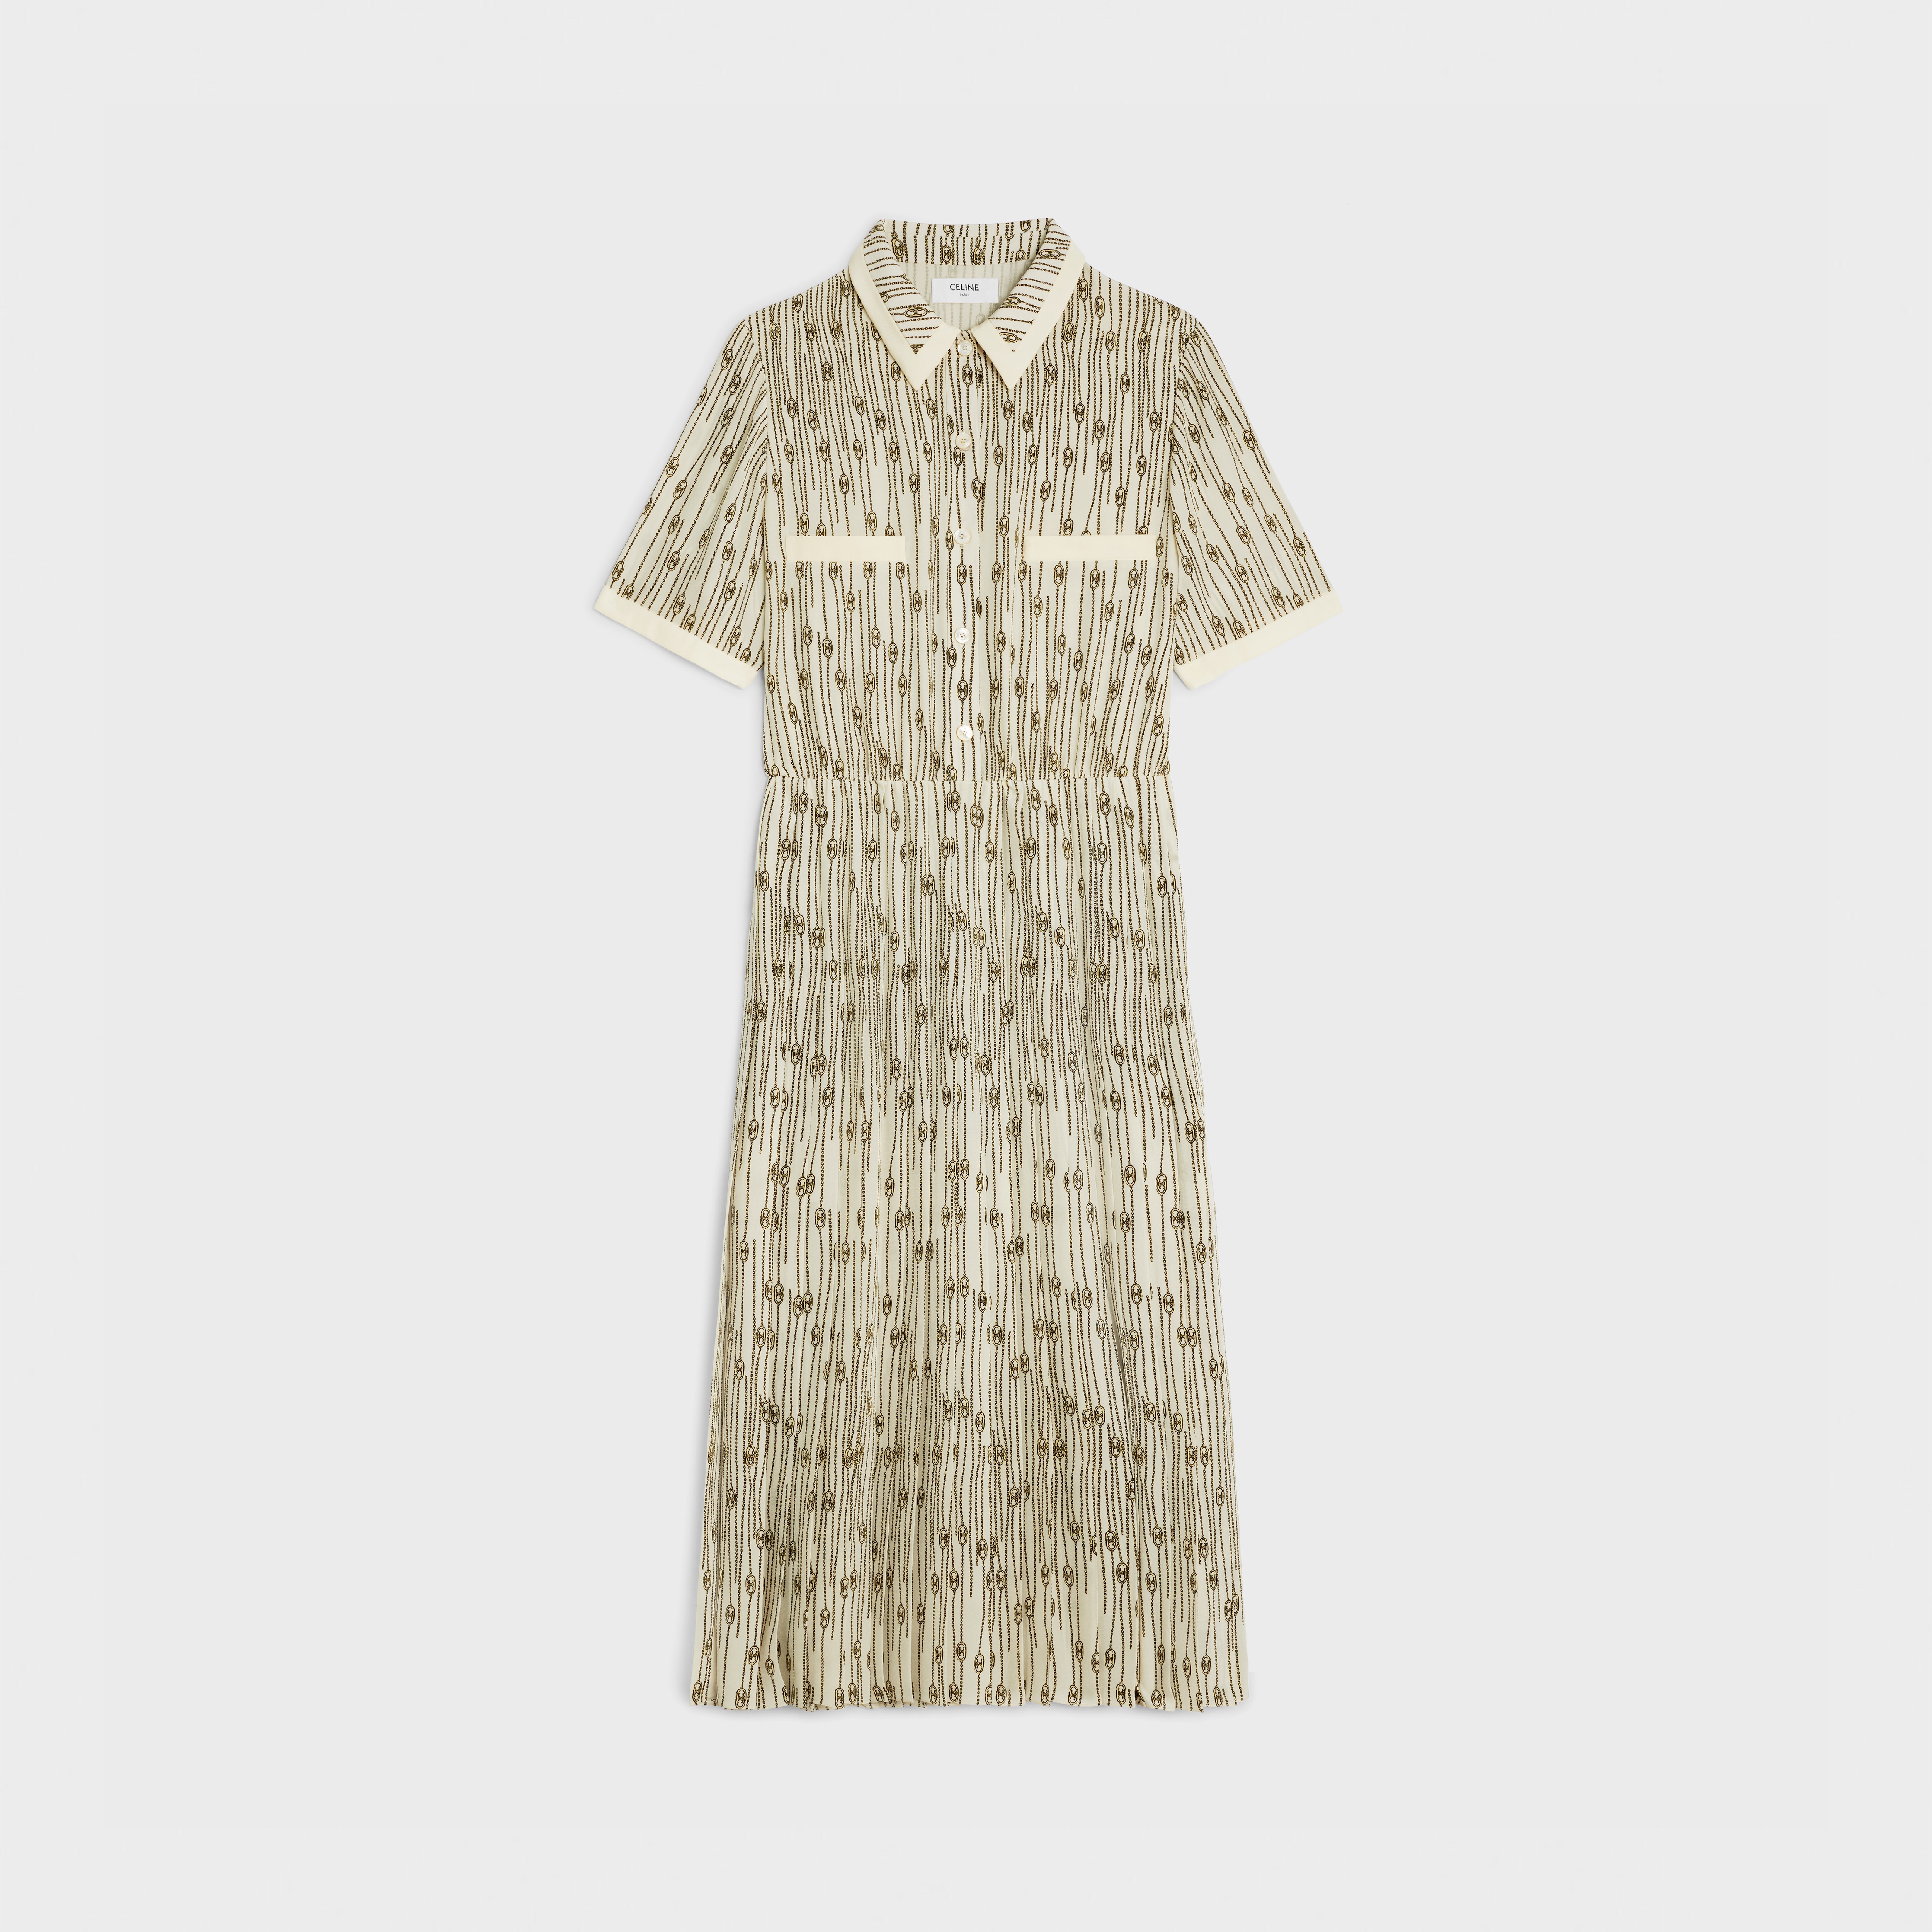 CELINE shirt dress in crepe de chine | REVERSIBLE